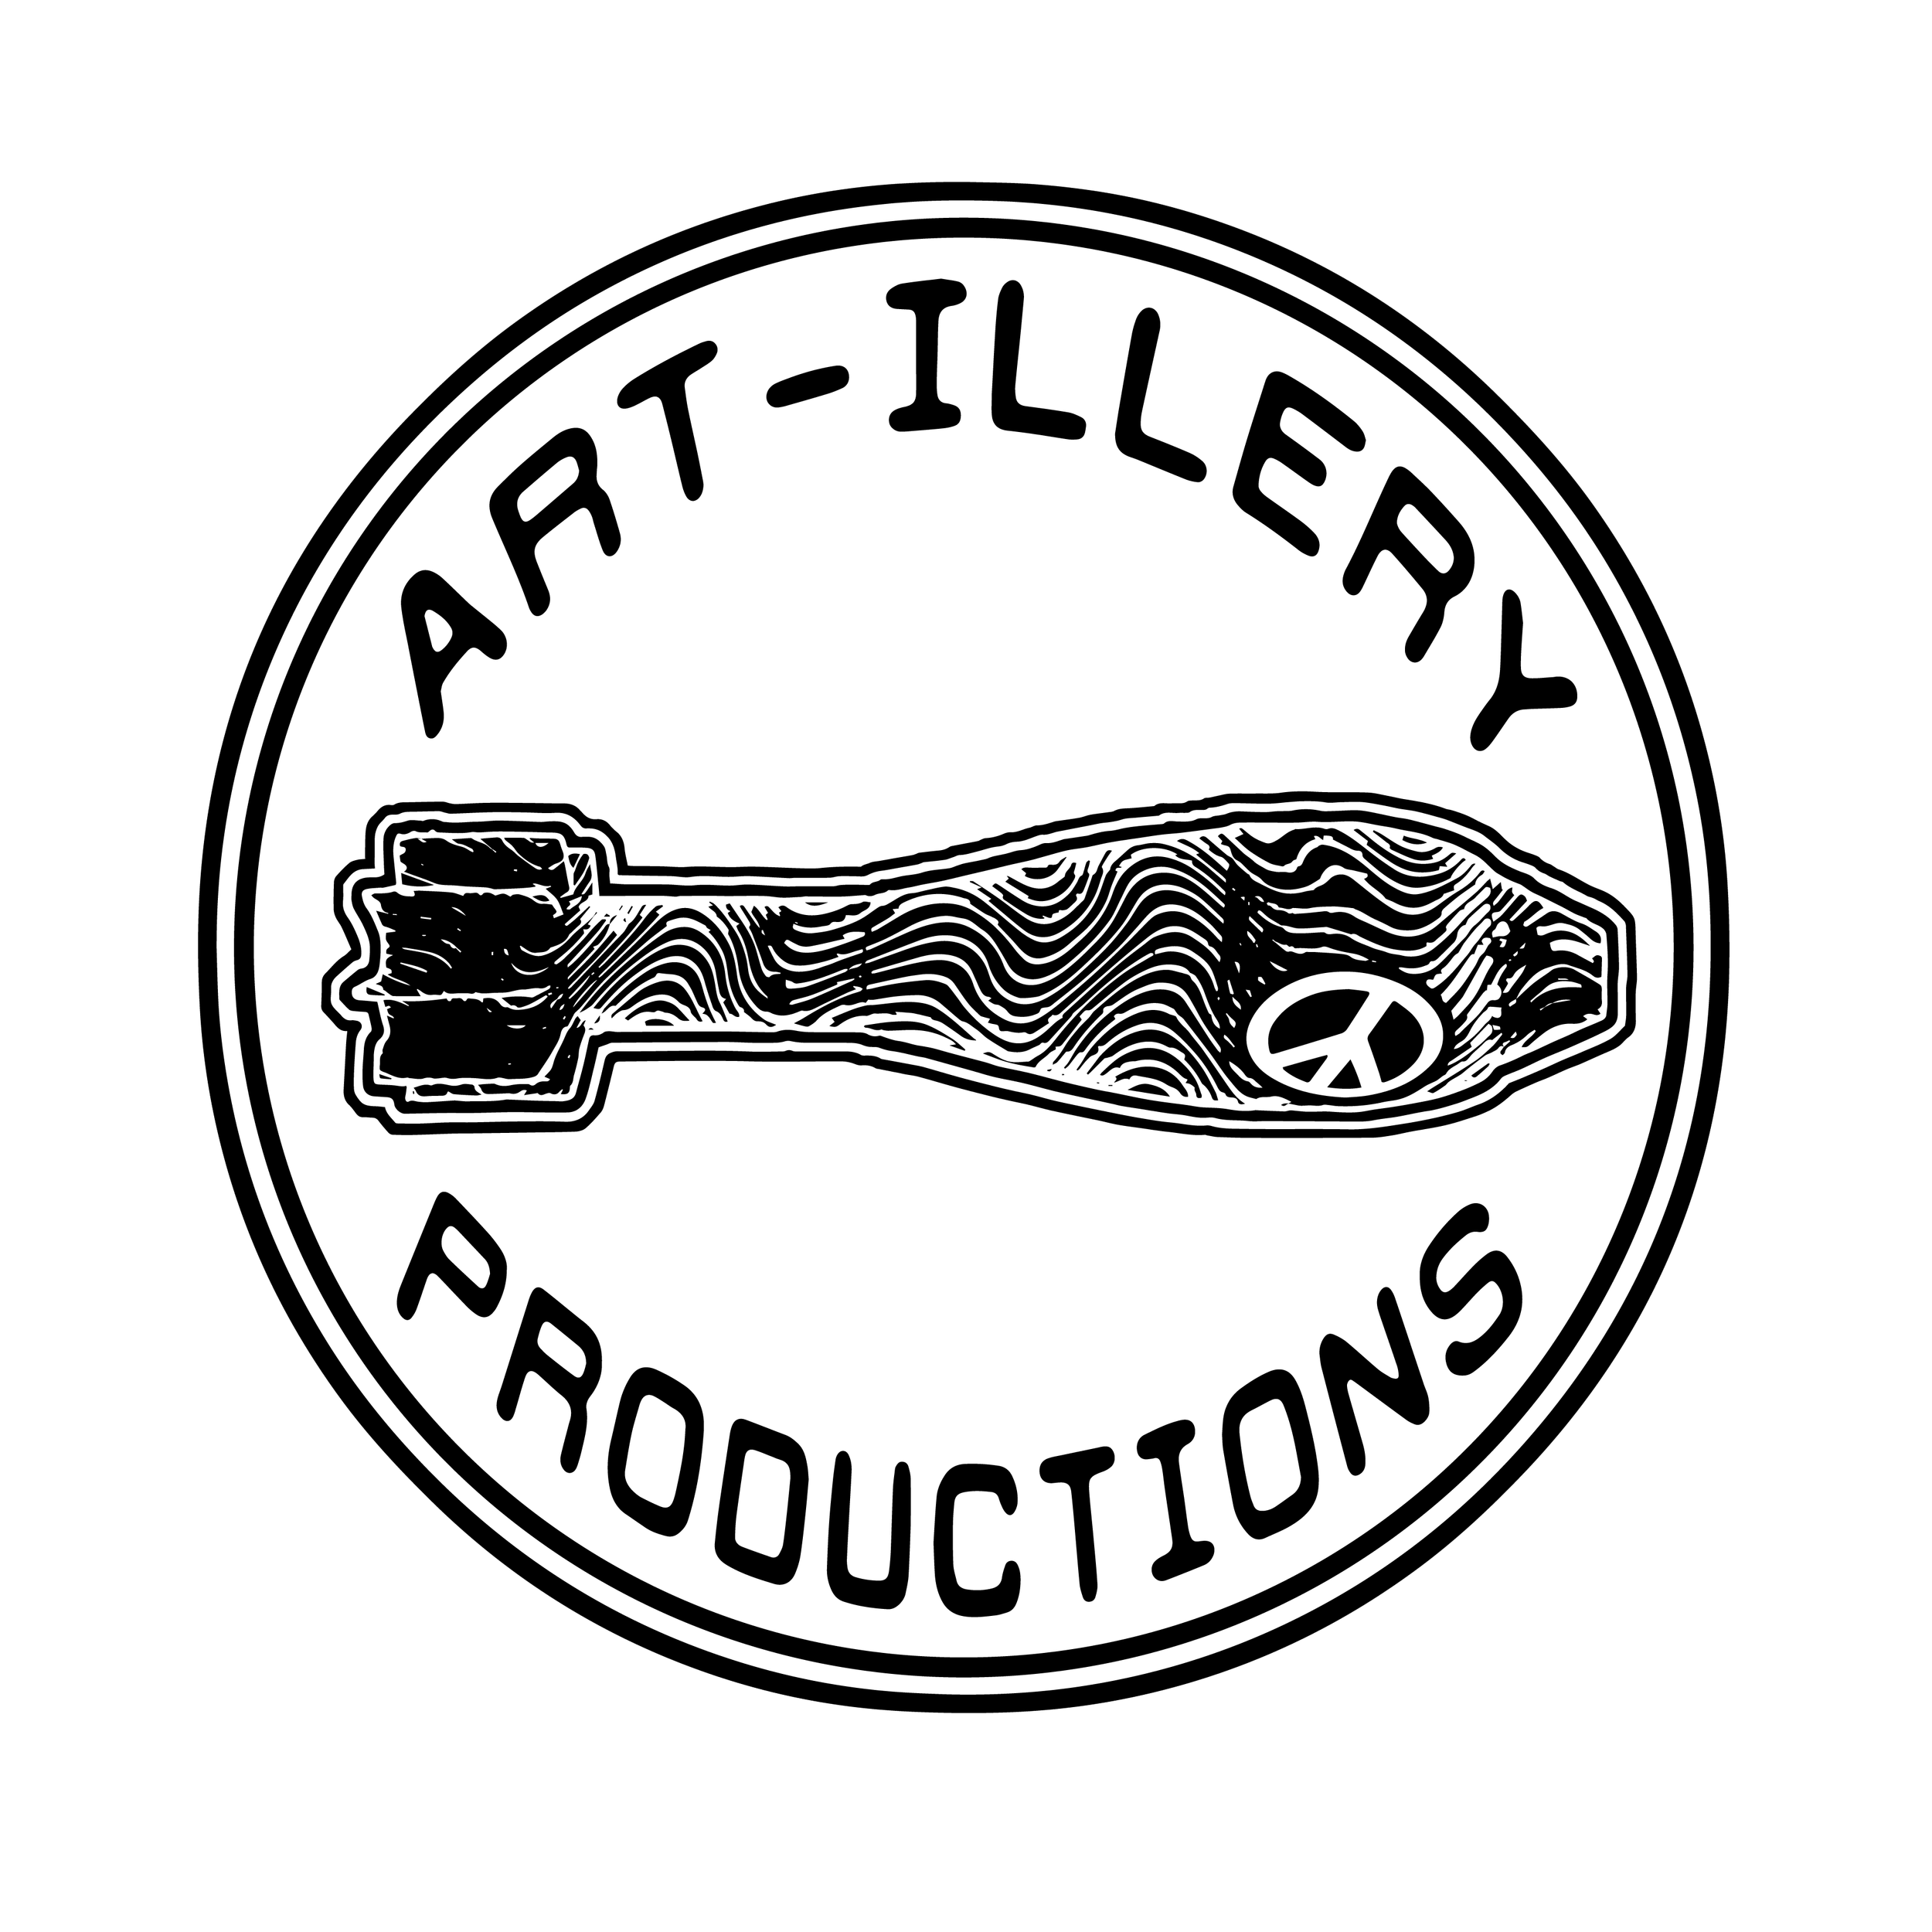 Art-ilery productions_CIRCLE_BW.png